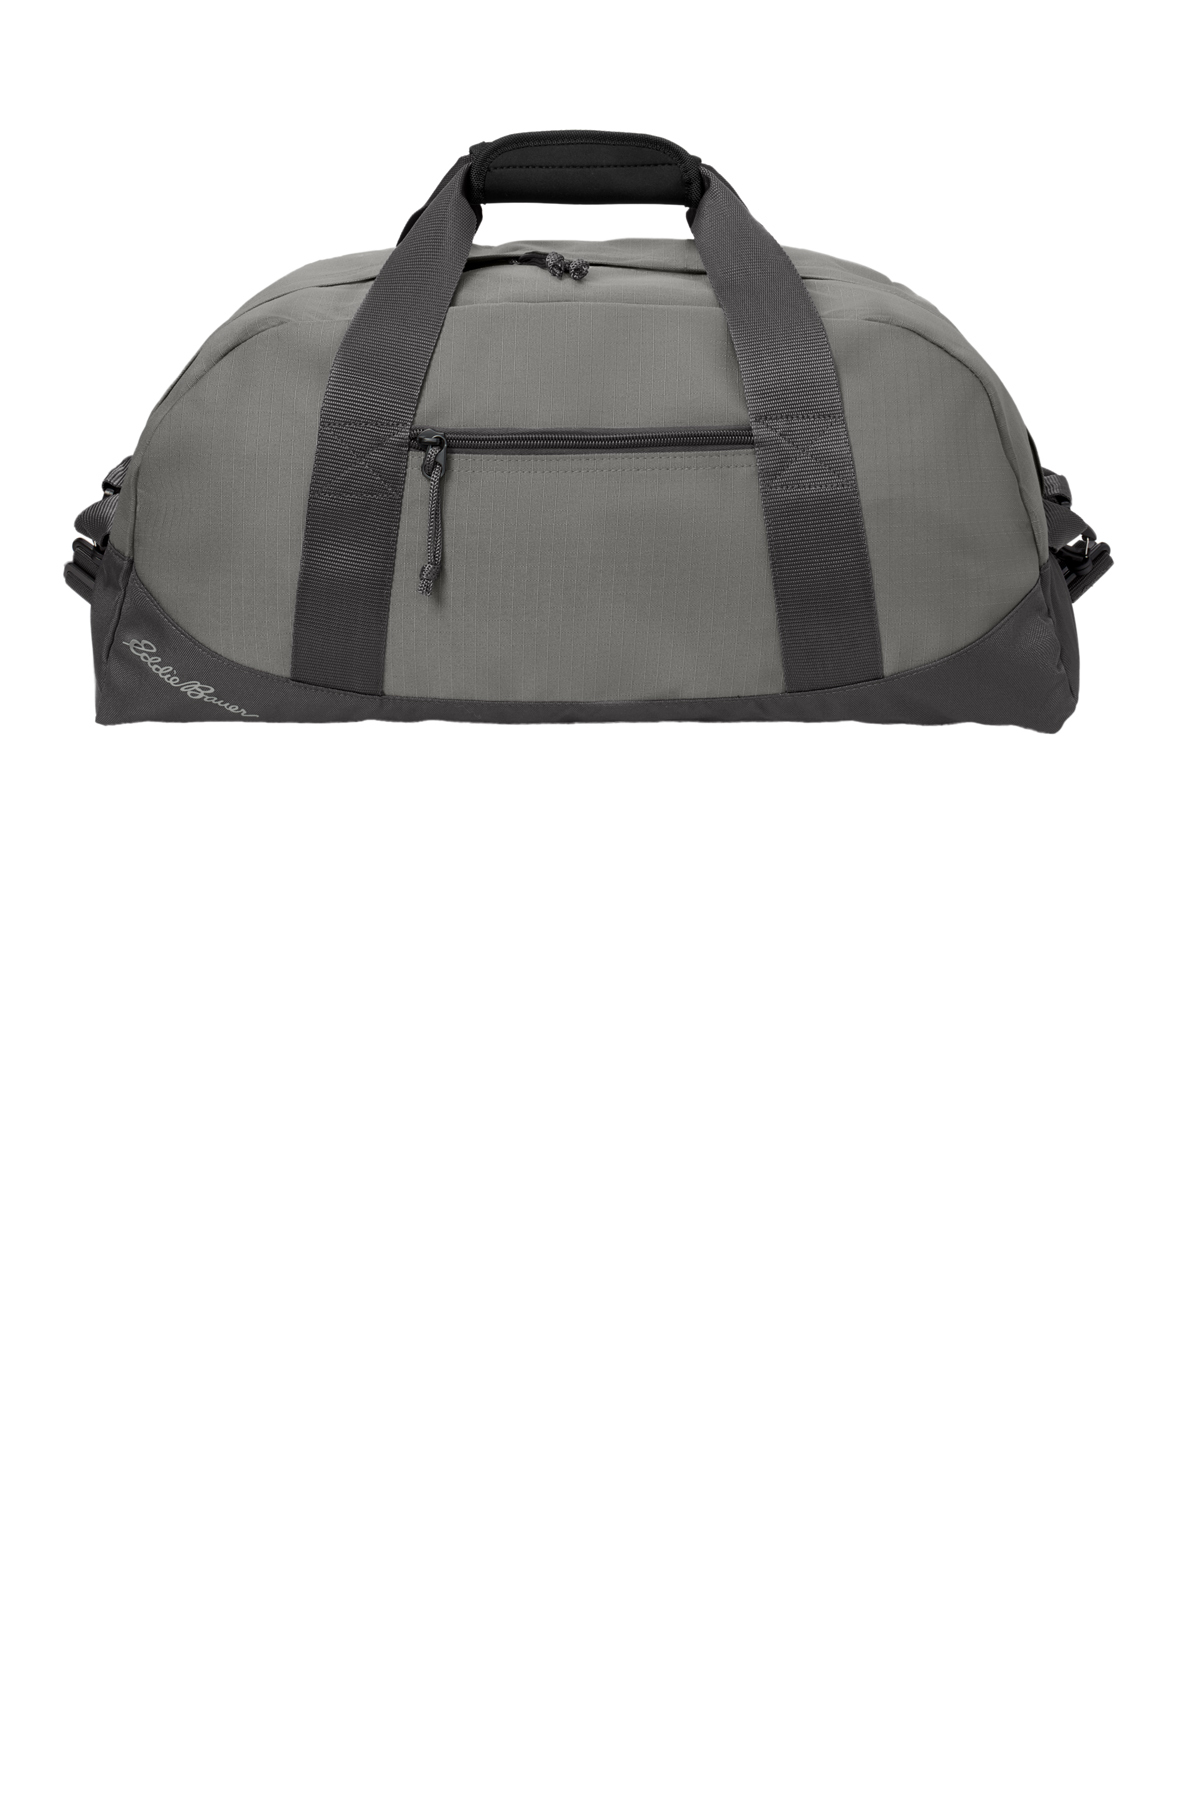 Medium Travel Duffel Bag - Performance Twill